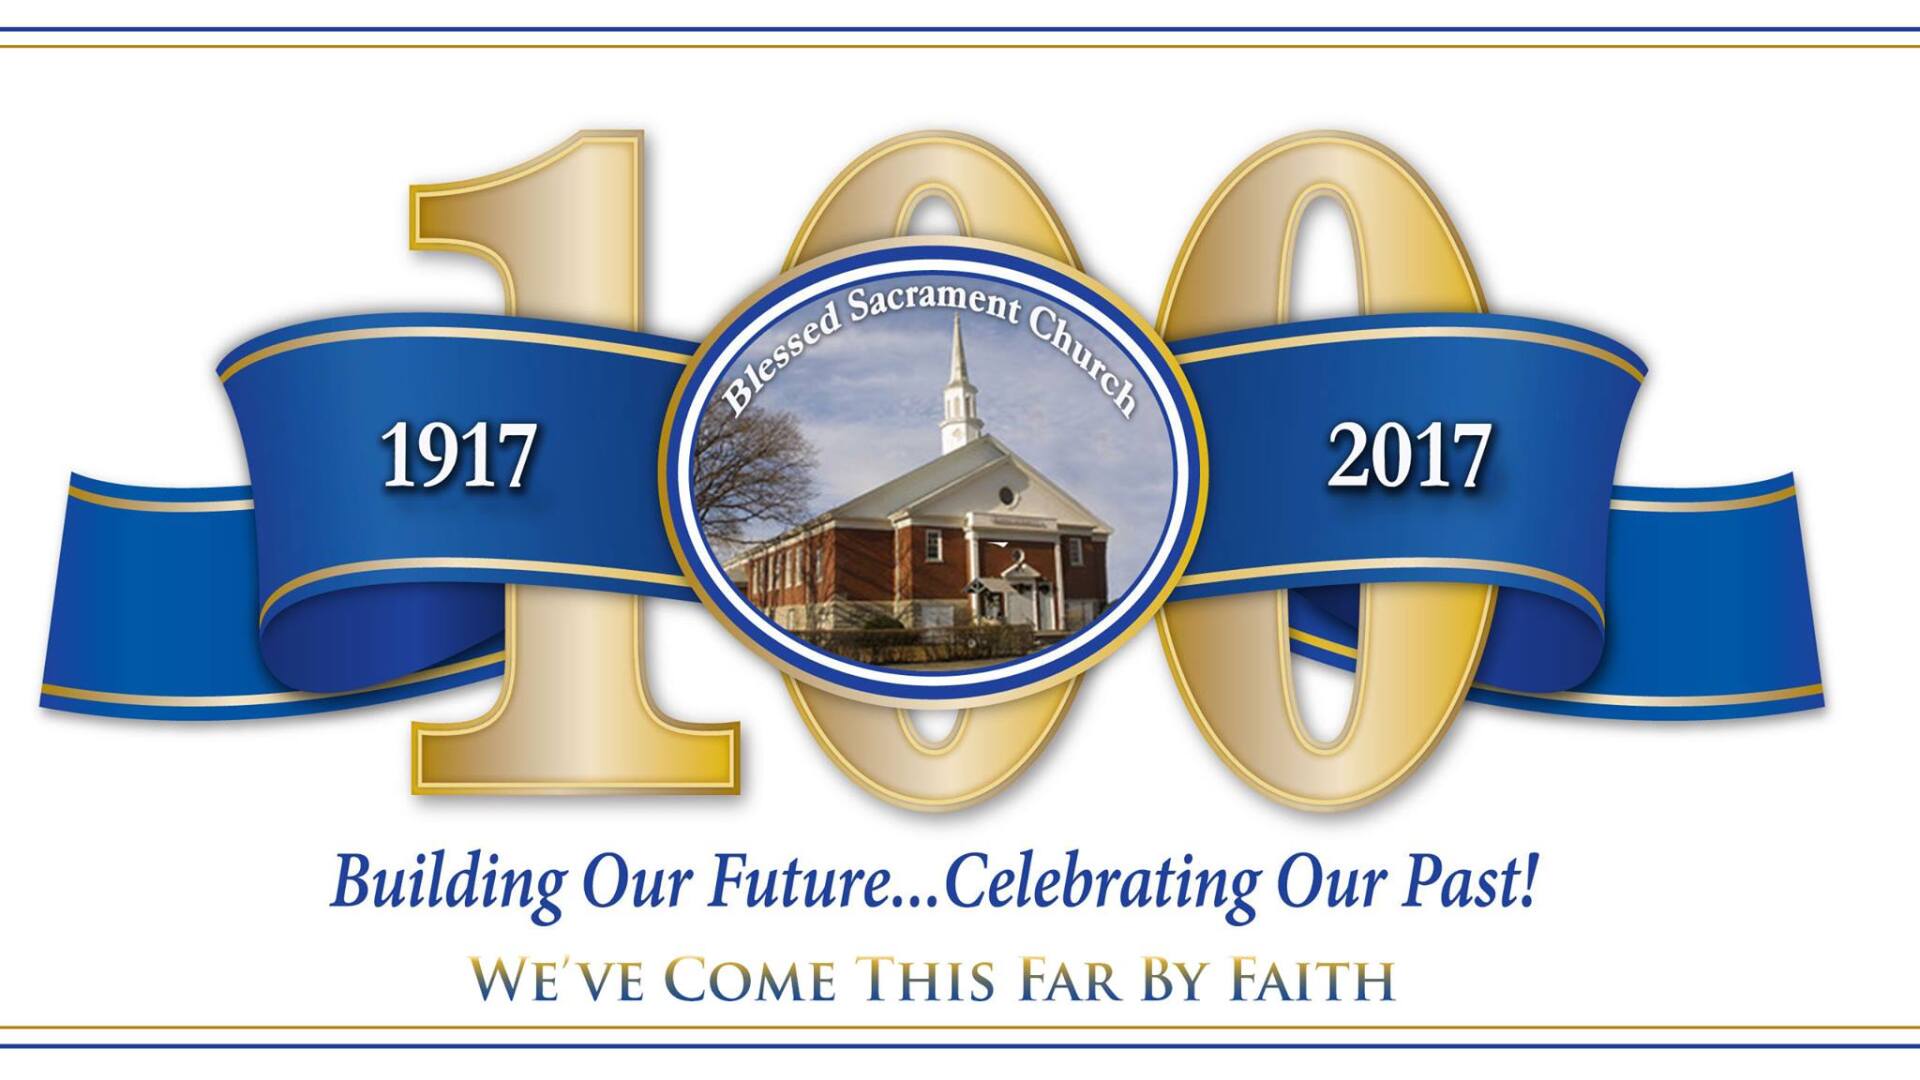 Blessed Sacrament Church 100th year banner